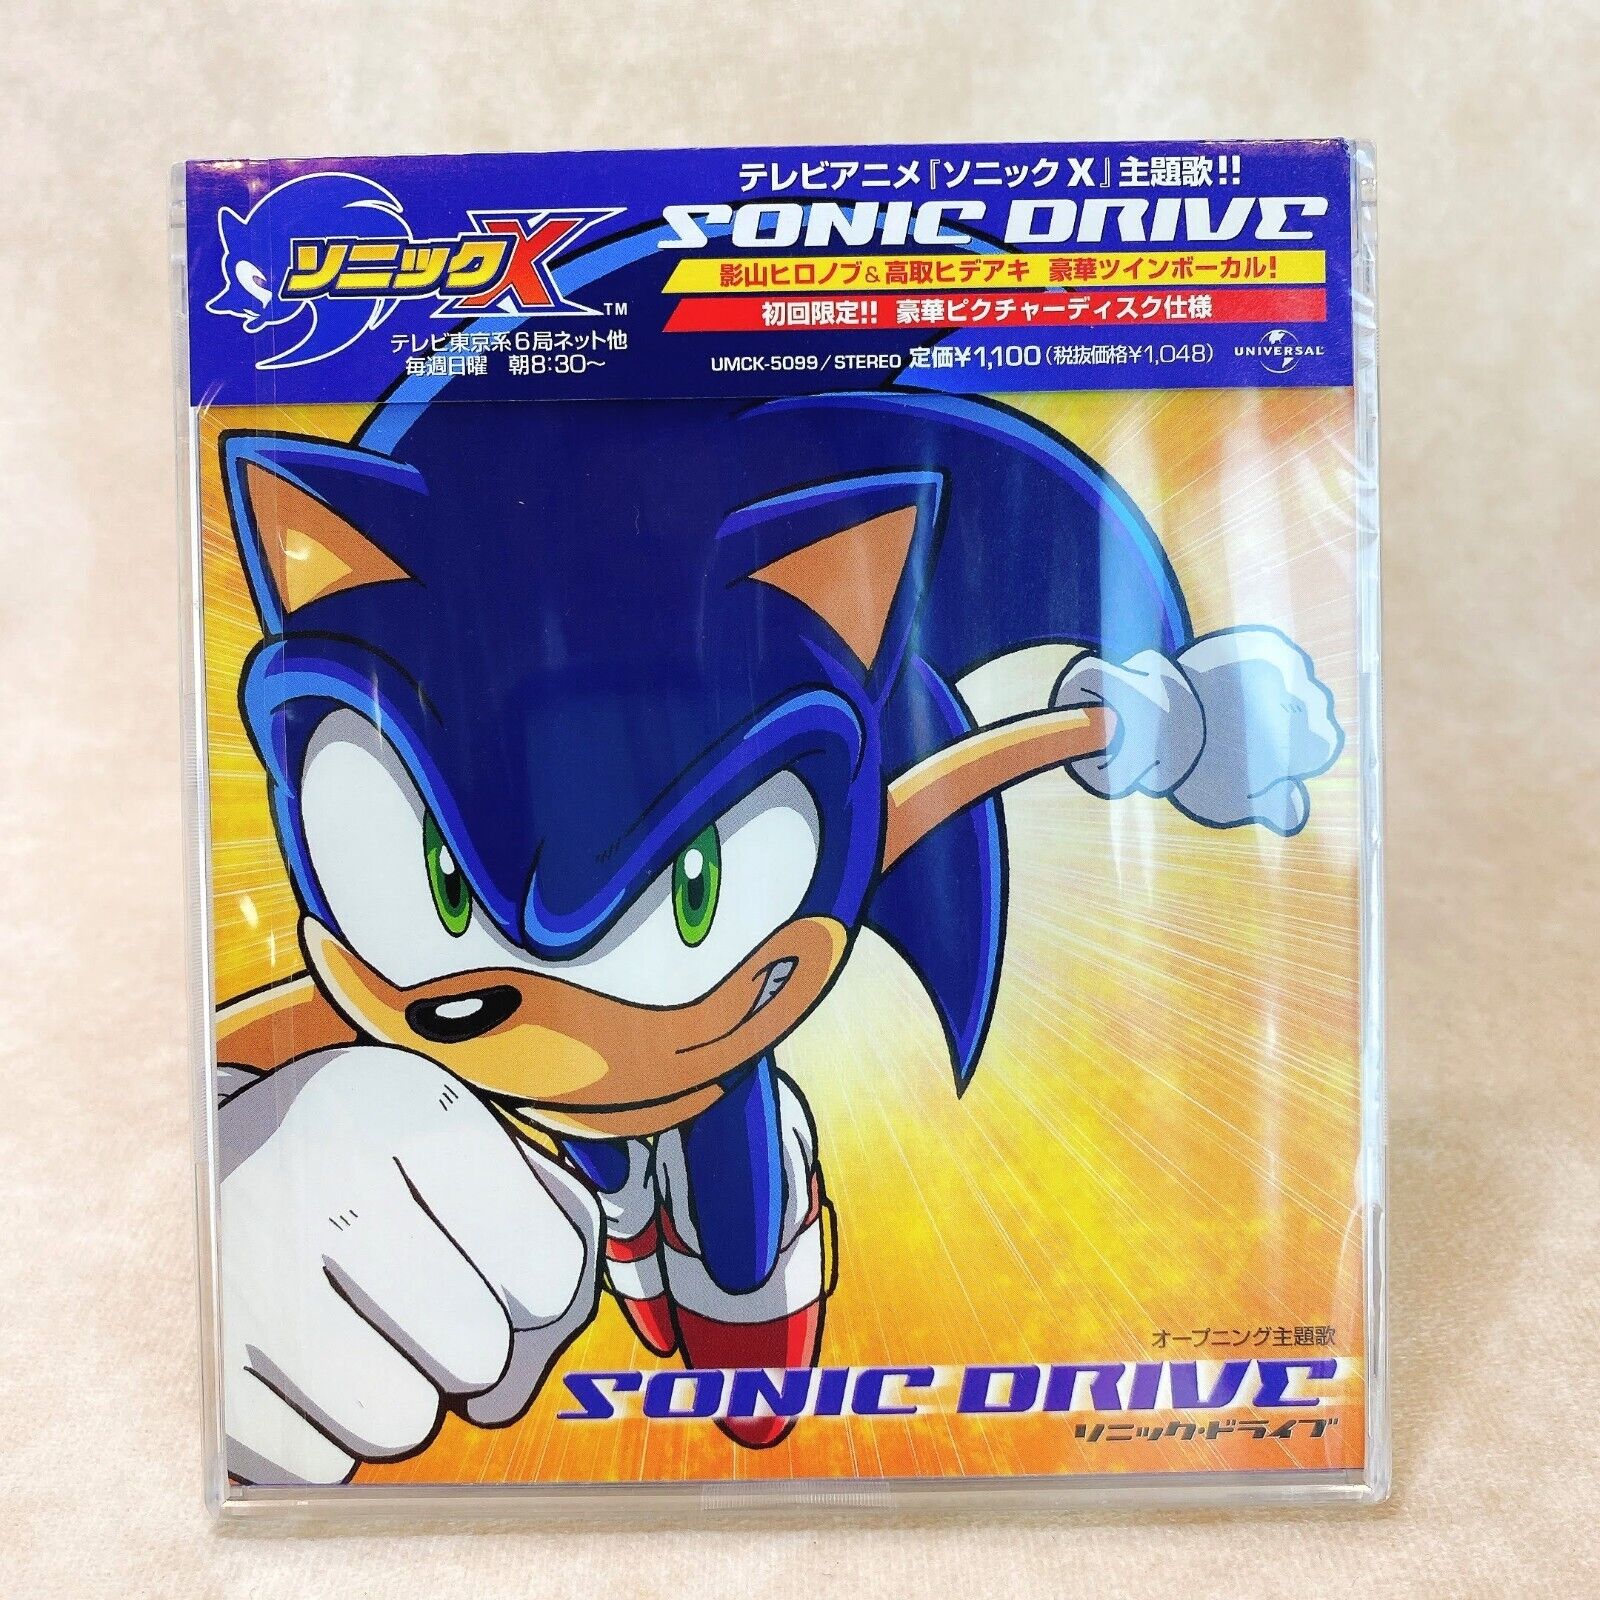 NEW 2003 Sonic X Sonic the Hedgehog music CD Soundtrack SONIC DRIVE